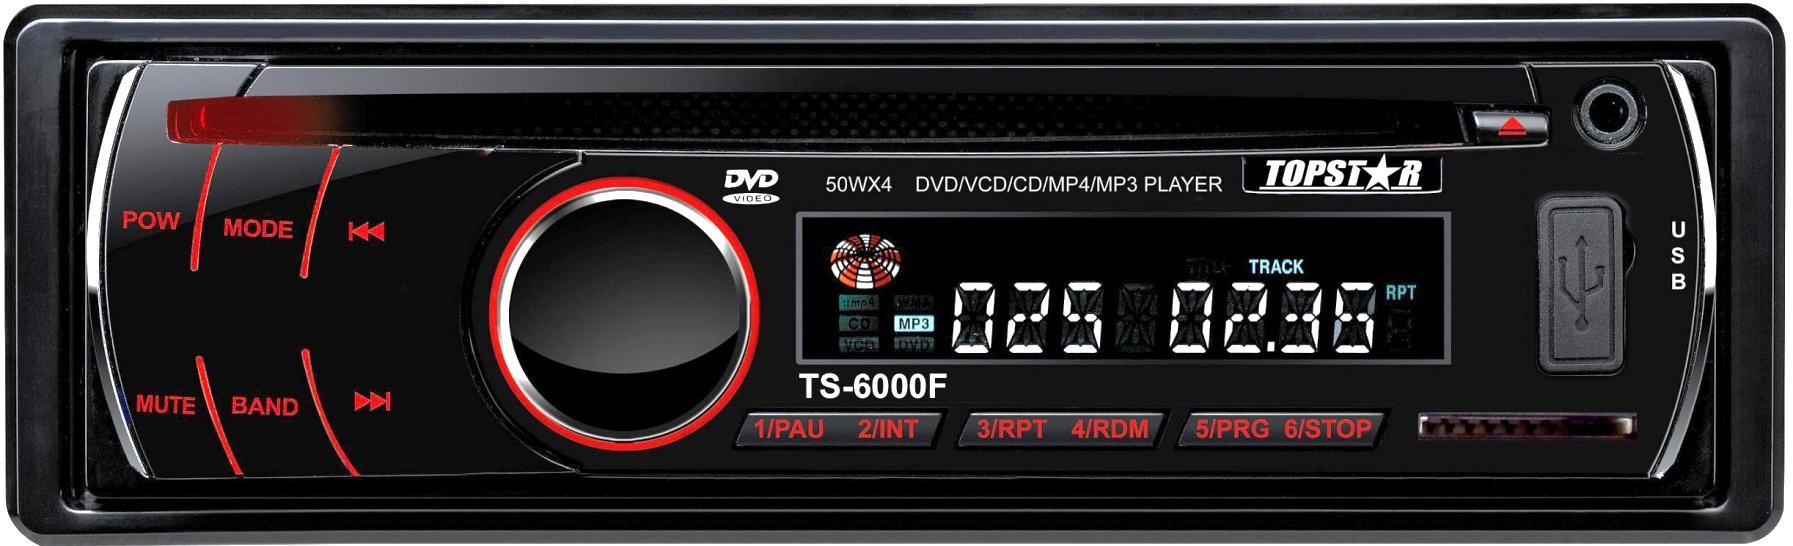 Auto Stereo One DIN Painel Fixo Carro DVD Player com porta USB/SD/MMC